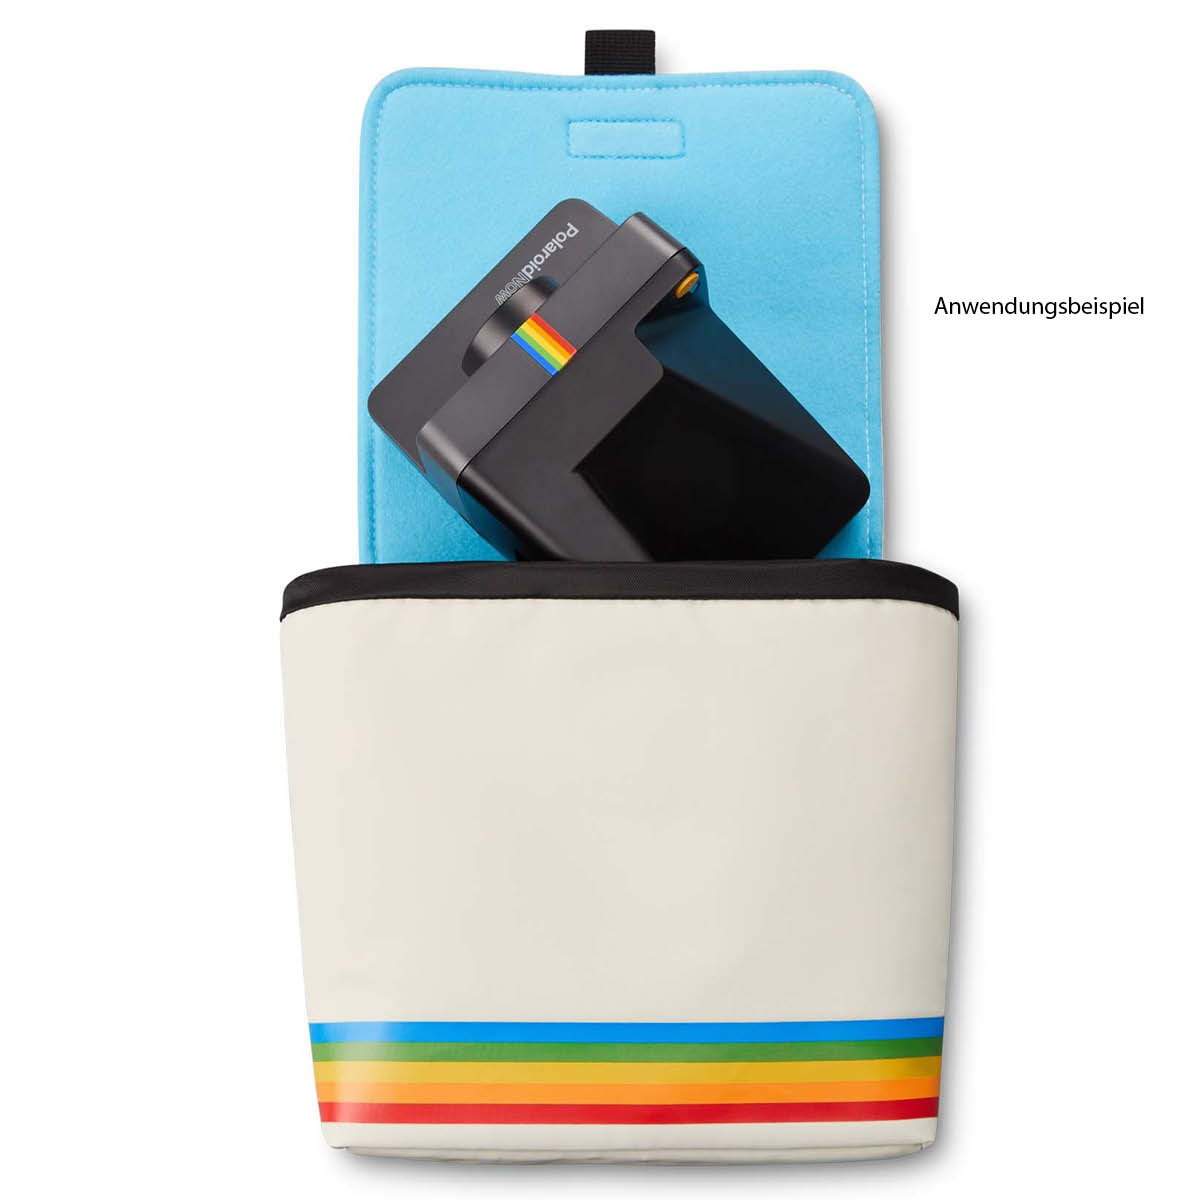 Polaroid Box Camera Bag Weiss